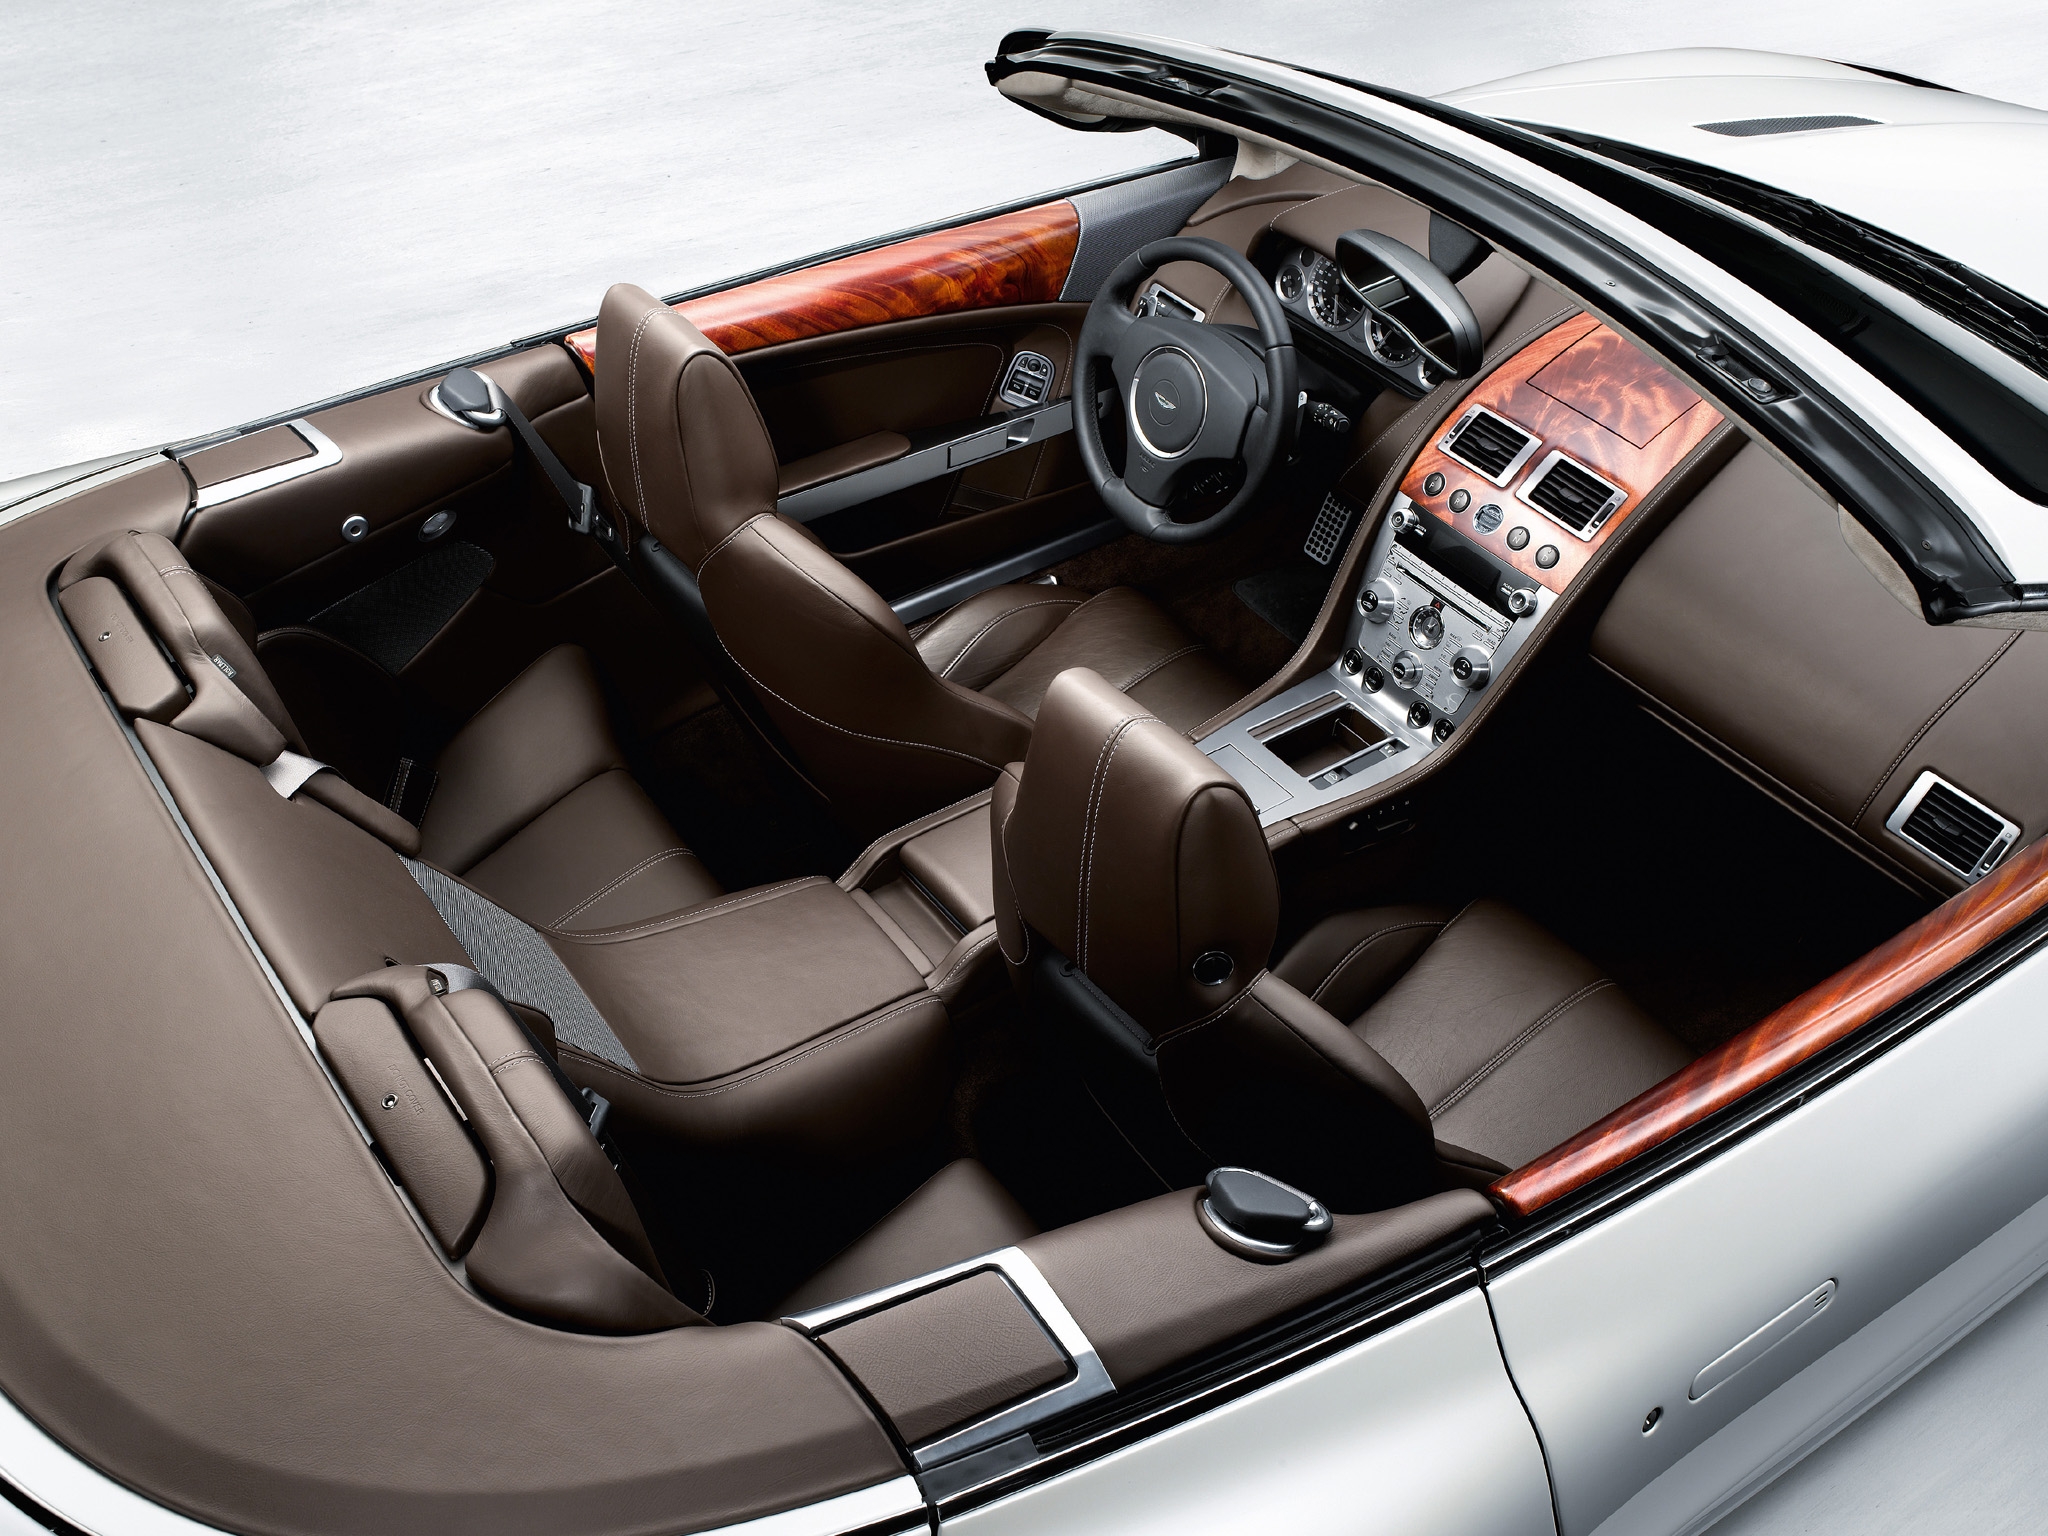 steering wheel, interior, aston martin, cars, view from above, brown, 2008, rudder, salon, speedometer, db9 4K, Ultra HD